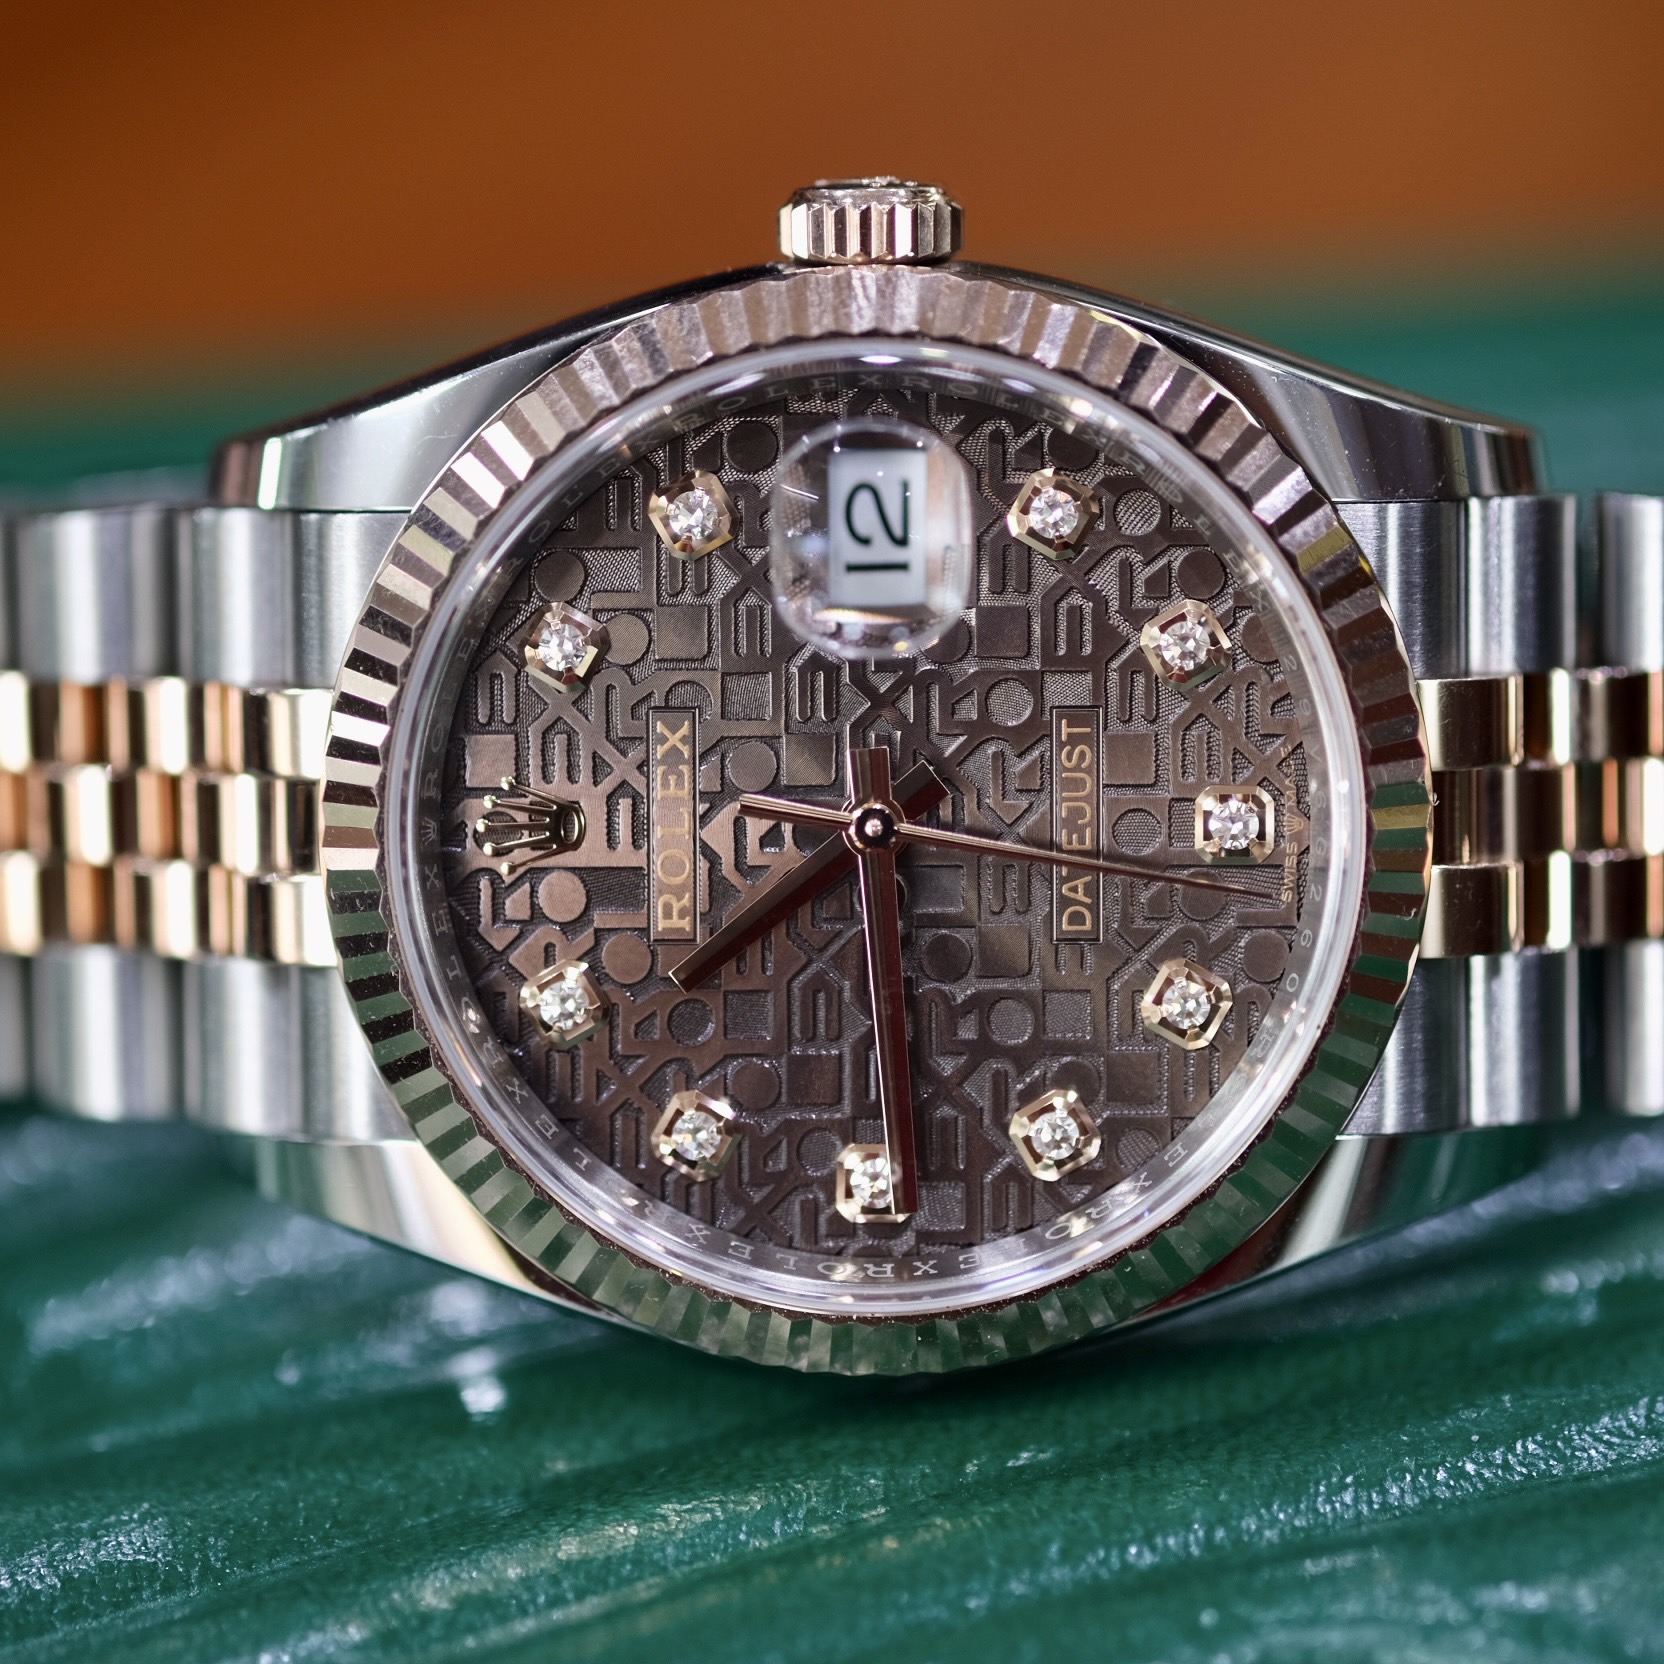 Đồng hồ Rolex Datejust 116231